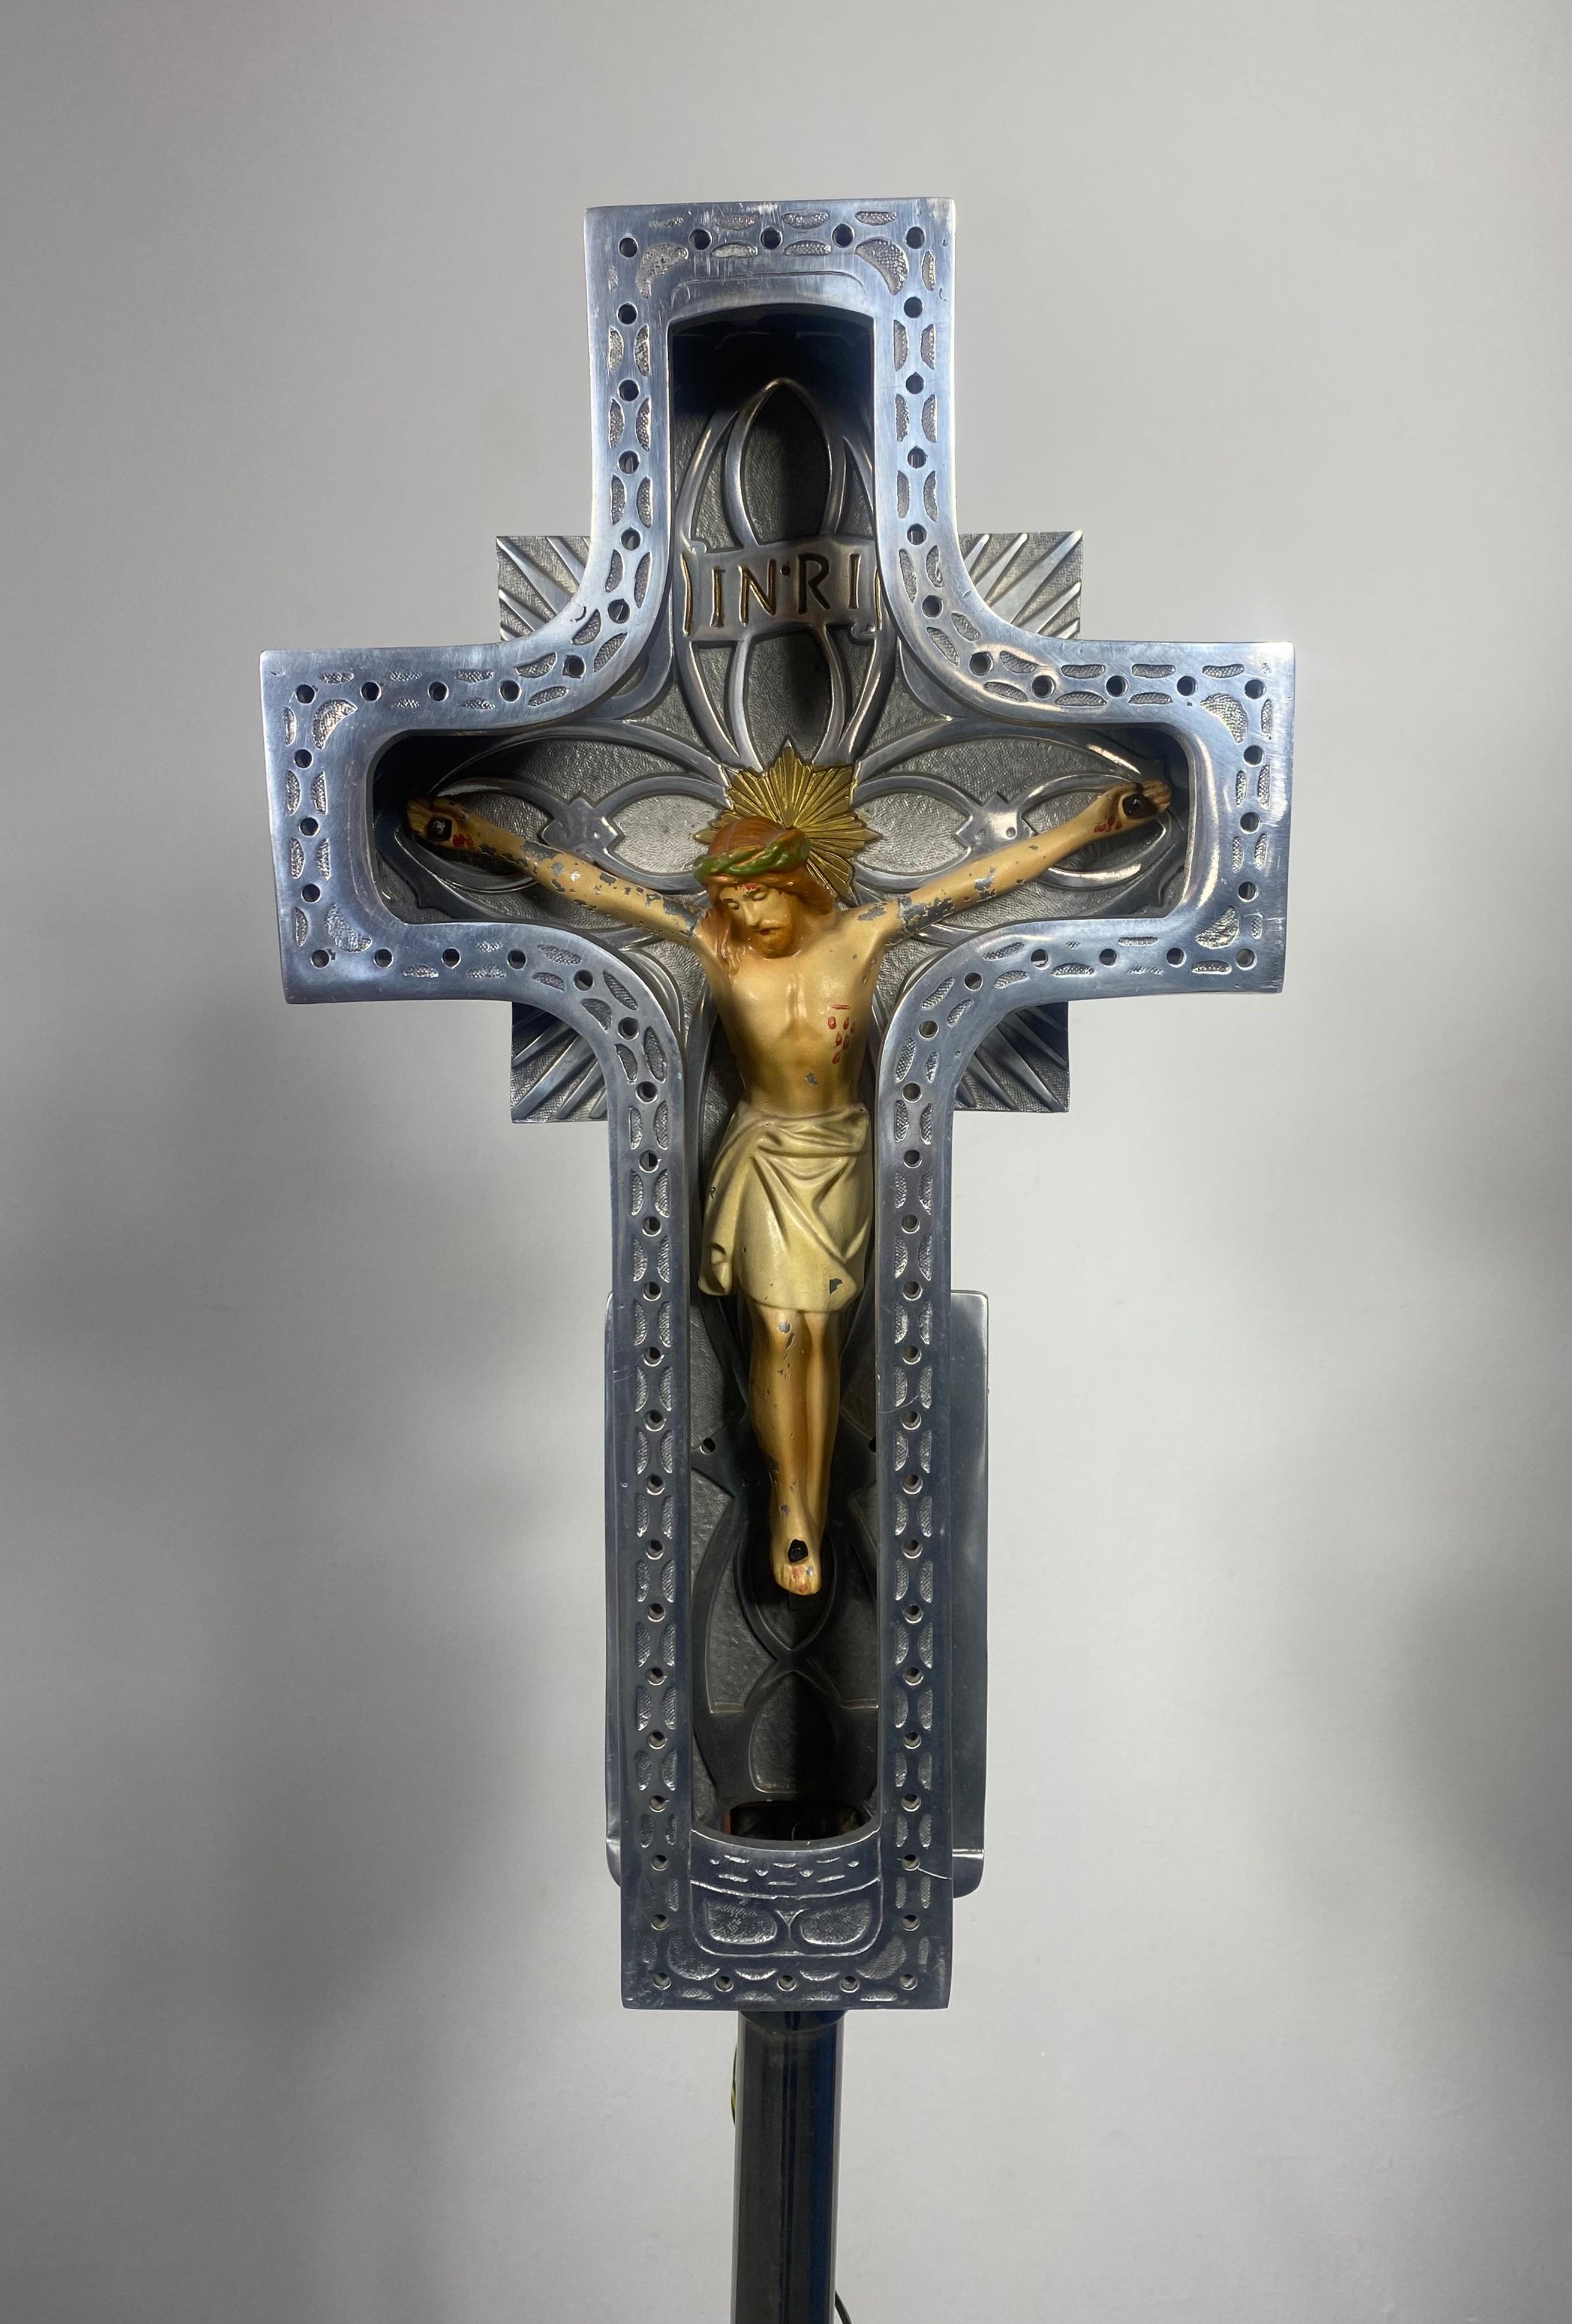 1920s / 30s Art Deco Cast Aluminum and Neon Crucifix. Beautiful original blue neon cross, Christ figure retains its wonderful original patina, minor paint loss.